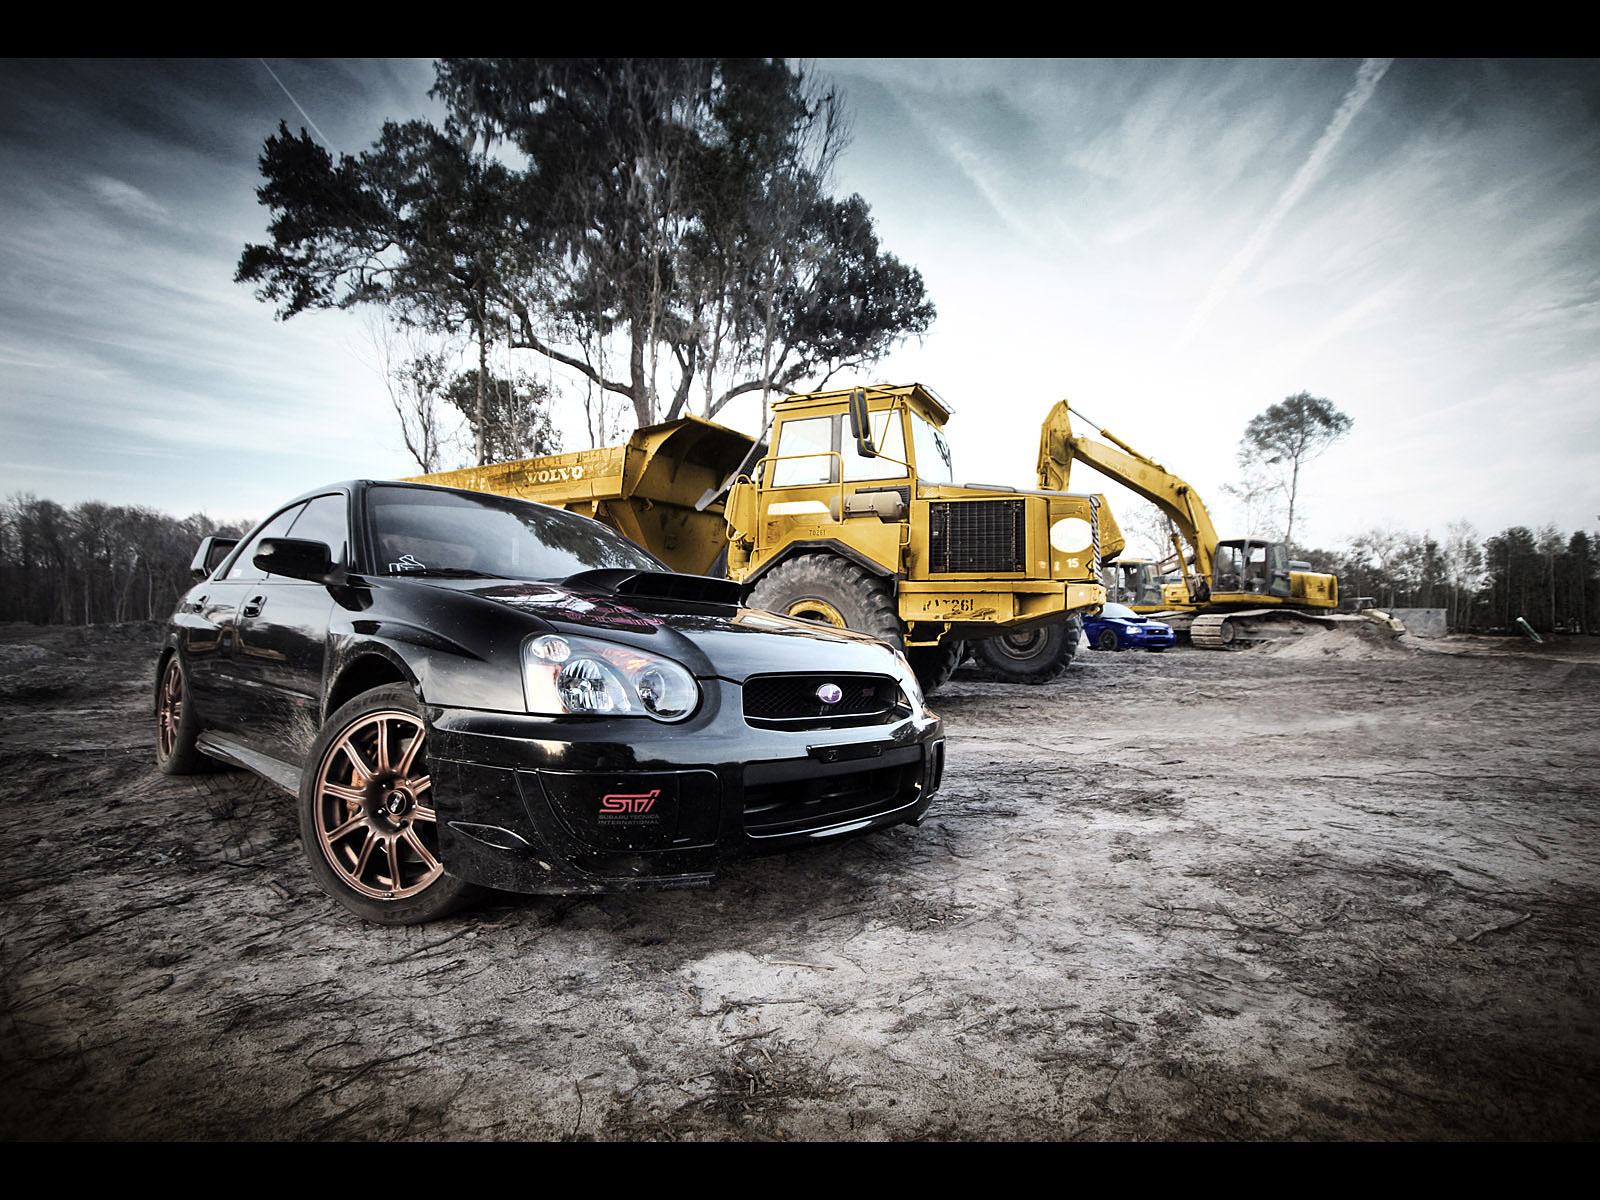 Subaru Wrx Pictures  Download Free Images on Unsplash